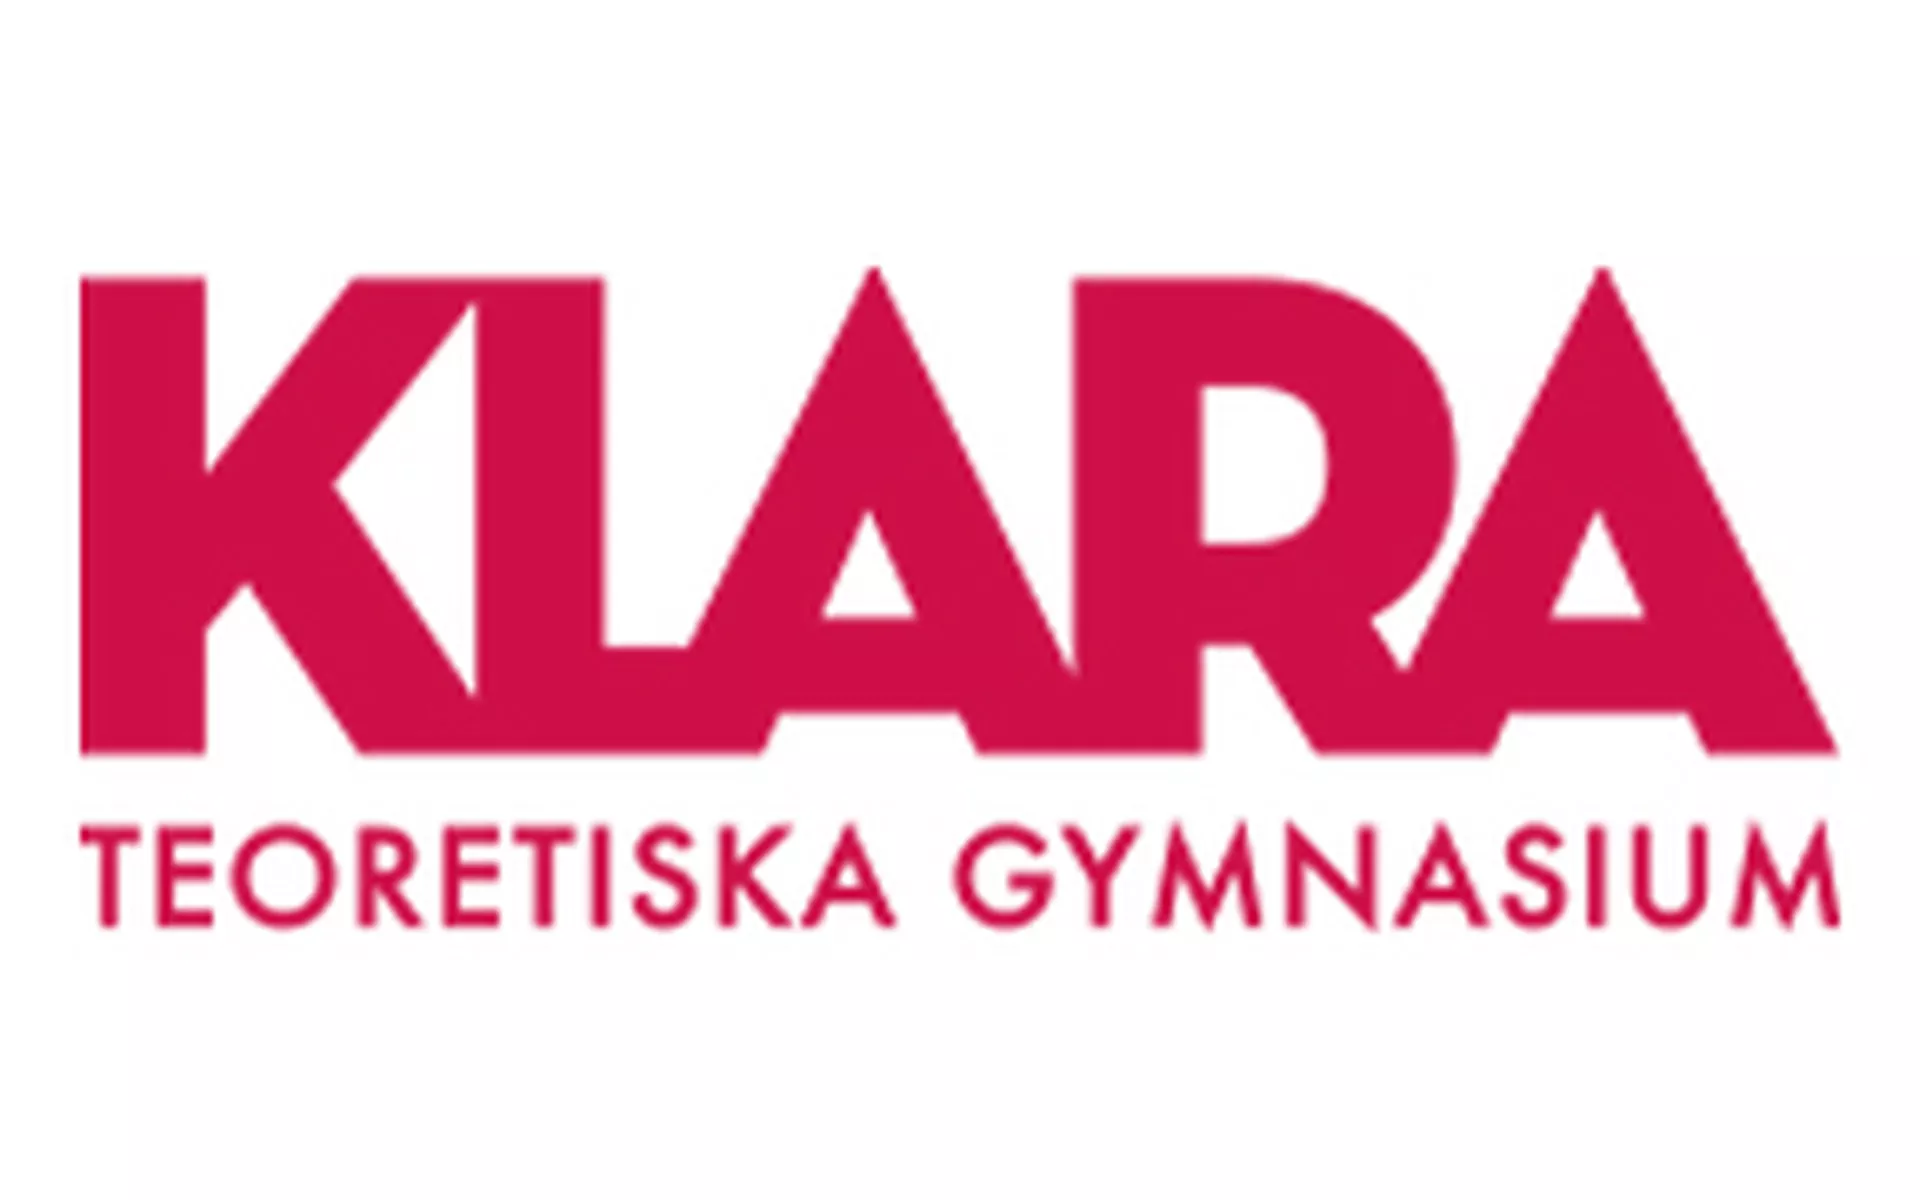 Klara Teoretiska Gymnasium Västerås